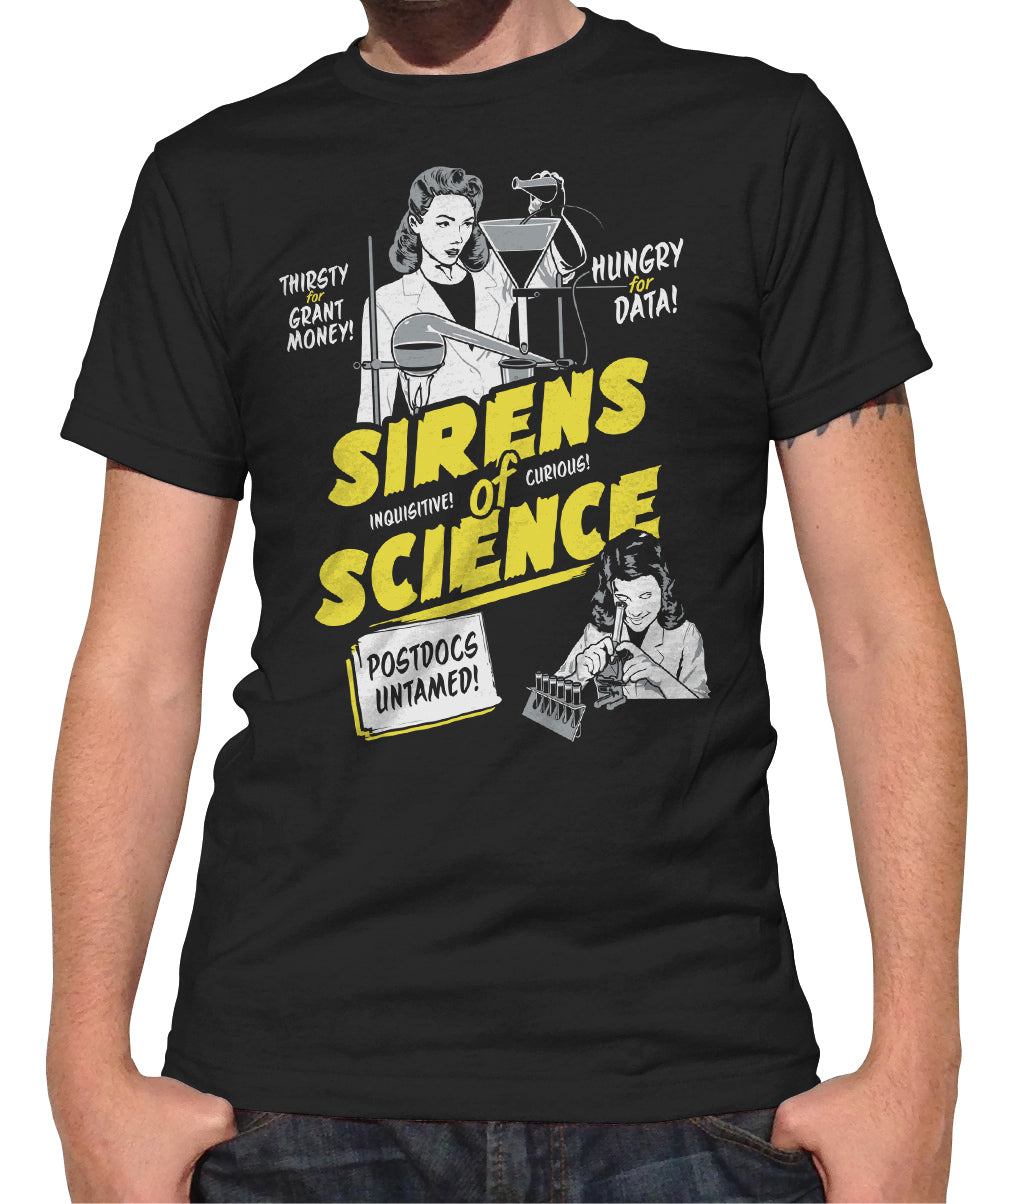 Men's Sirens of Science T-Shirt - By Ex-Boyfriend